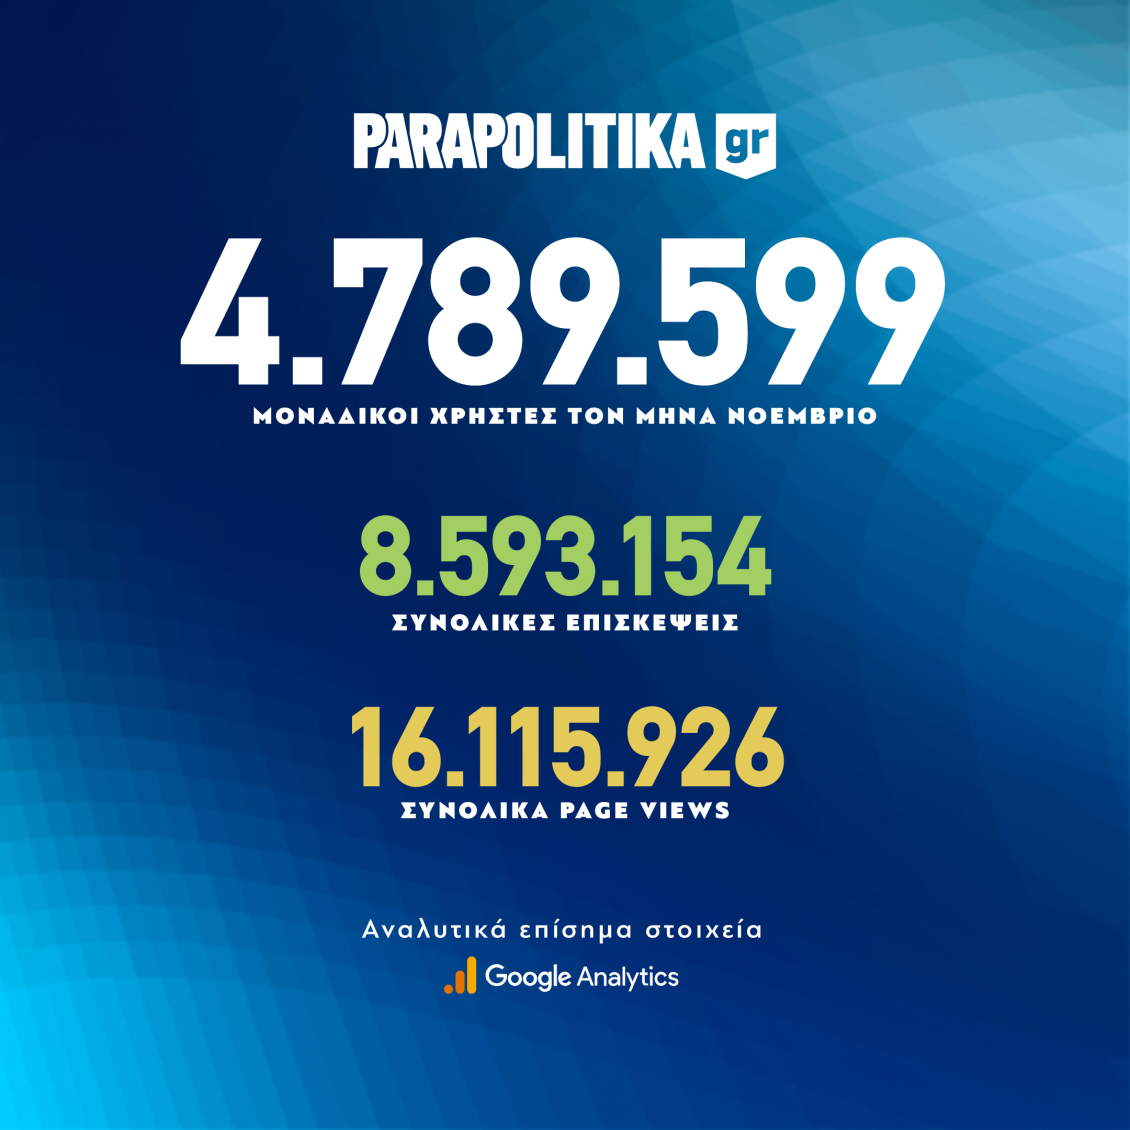 parapolitika_analytics_insta_Oct22__1_